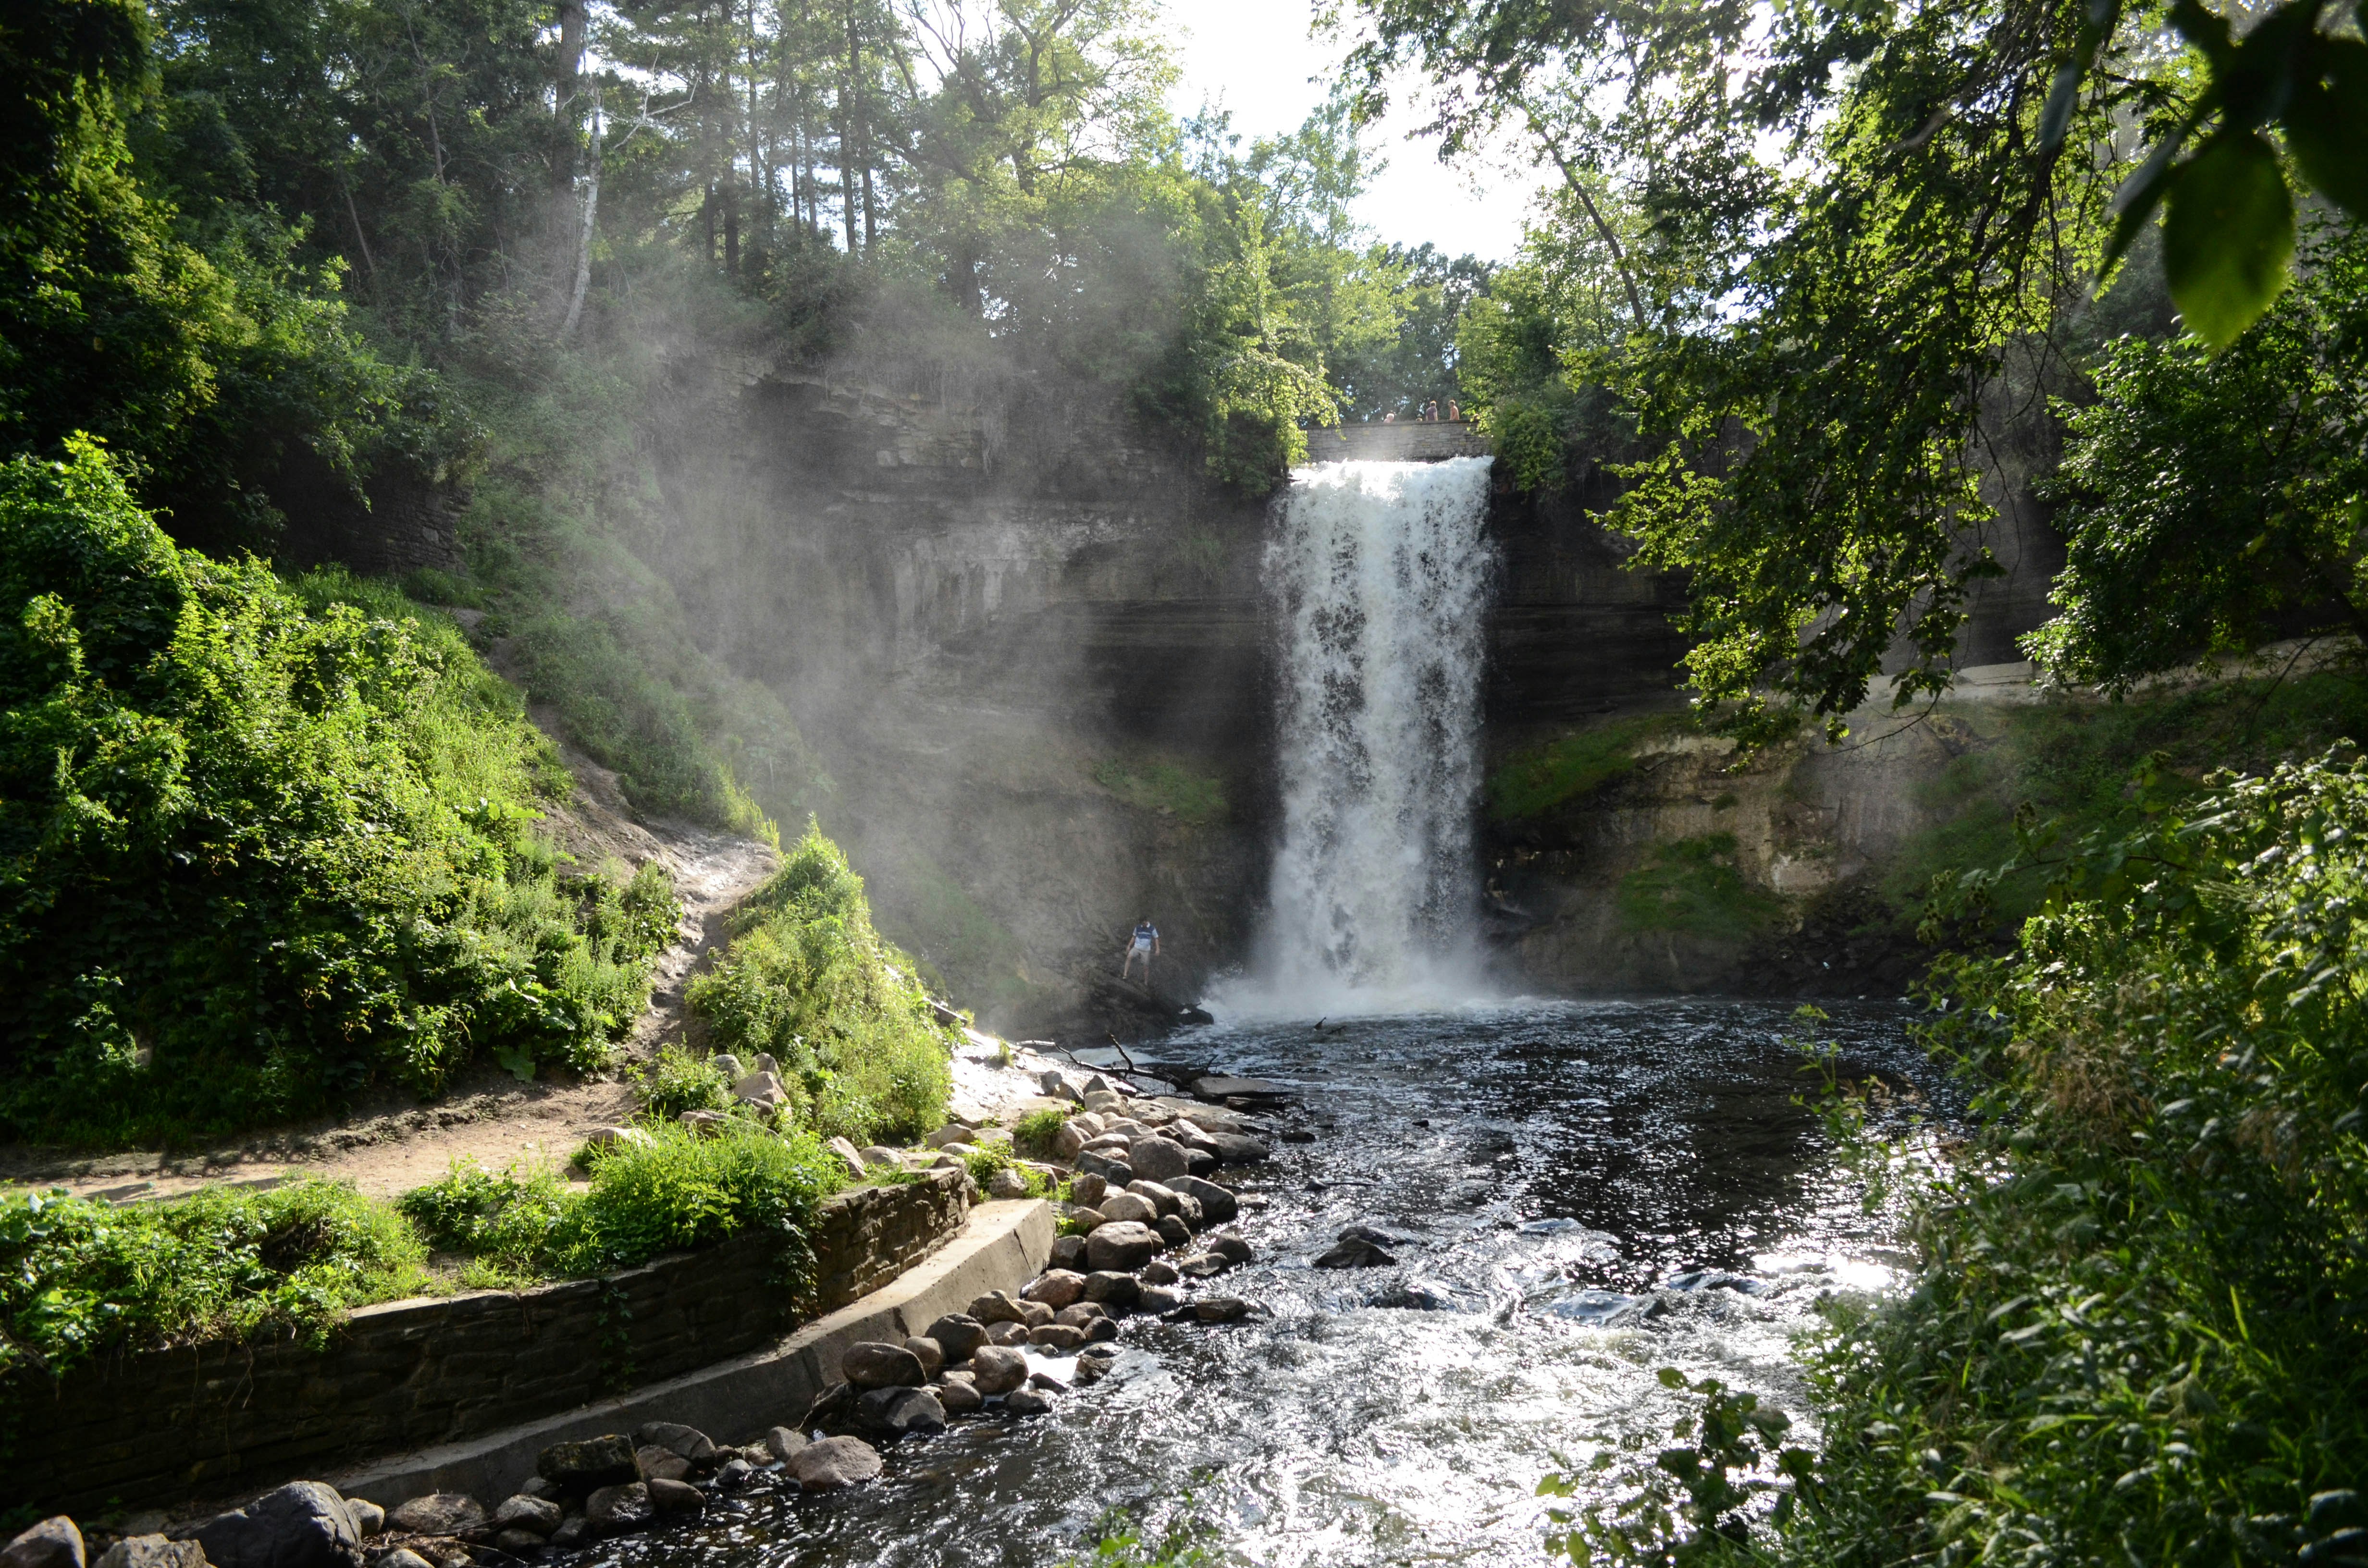 landscape photography of waterfalls near plants